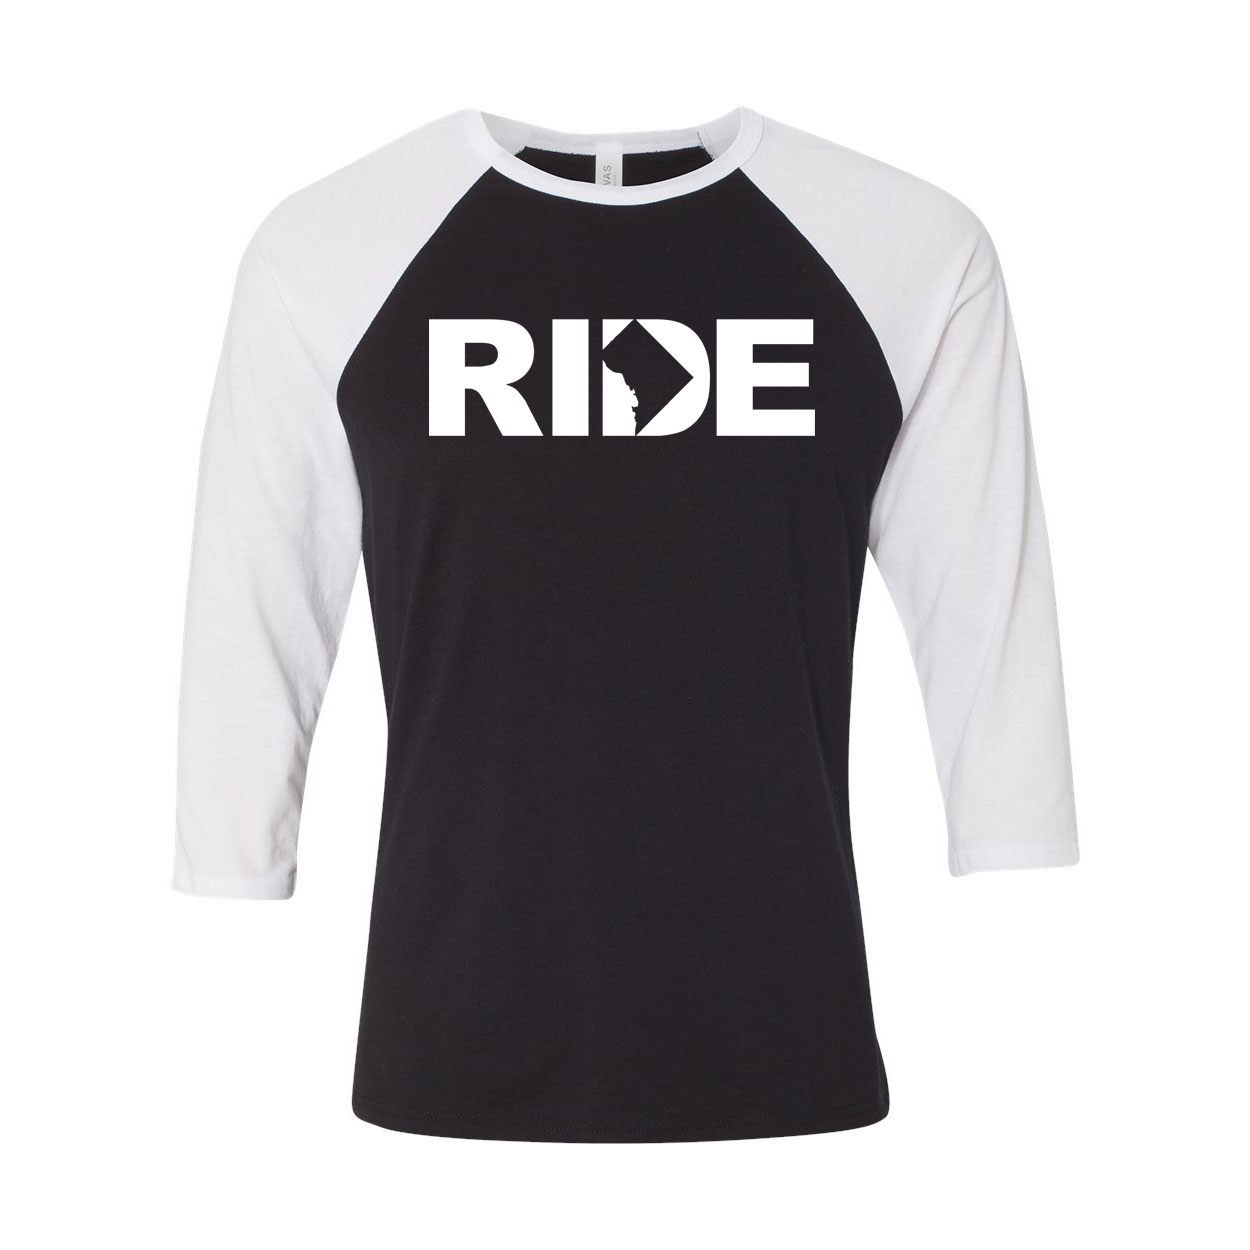 Ride District of Columbia Classic Raglan Shirt Black/White (White Logo)